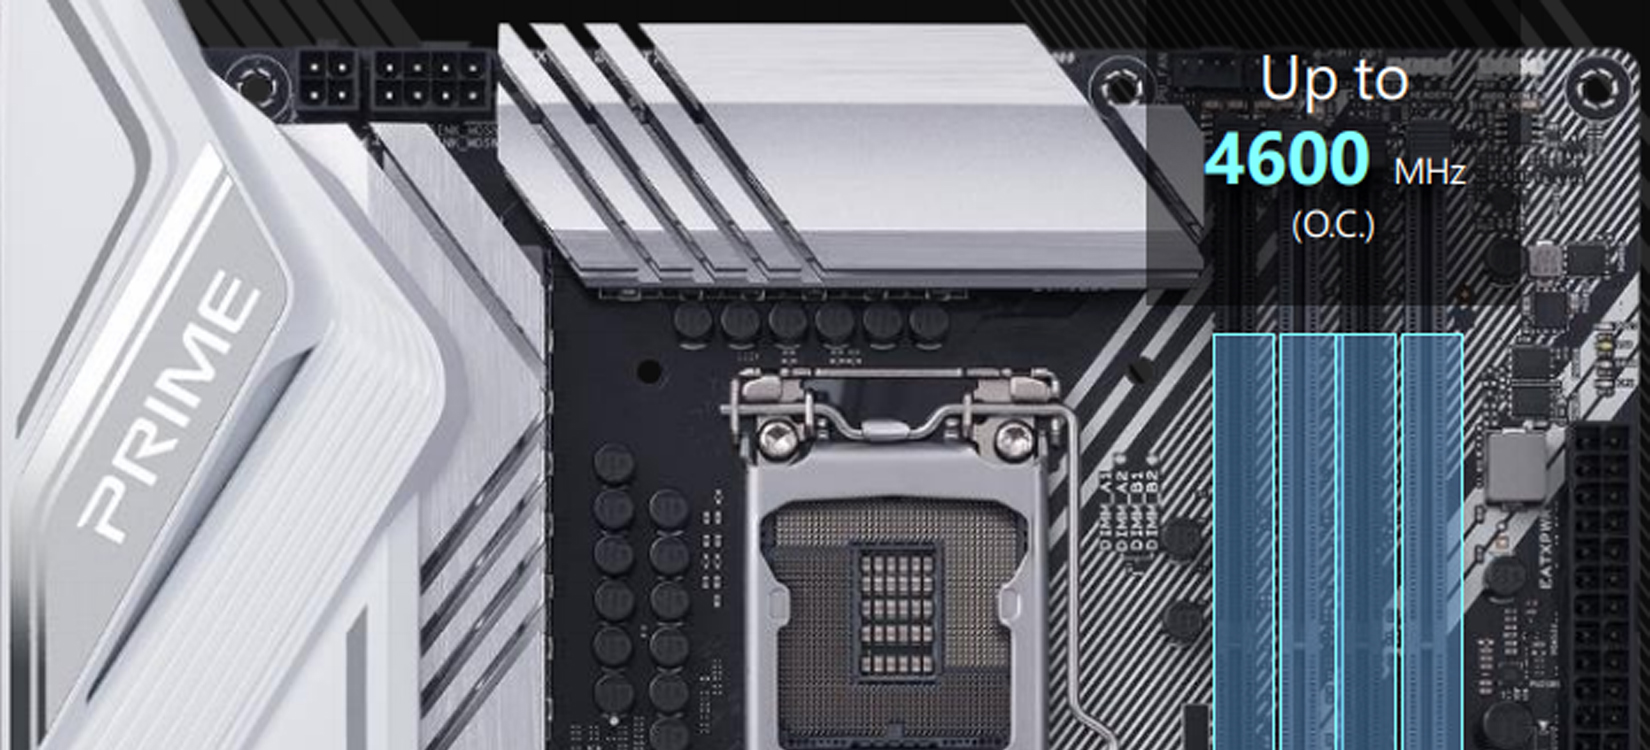 Mainboard ASUS PRIME Z490-A (Intel Z490, Socket 1200, ATX, 4 khe RAM DDR4)